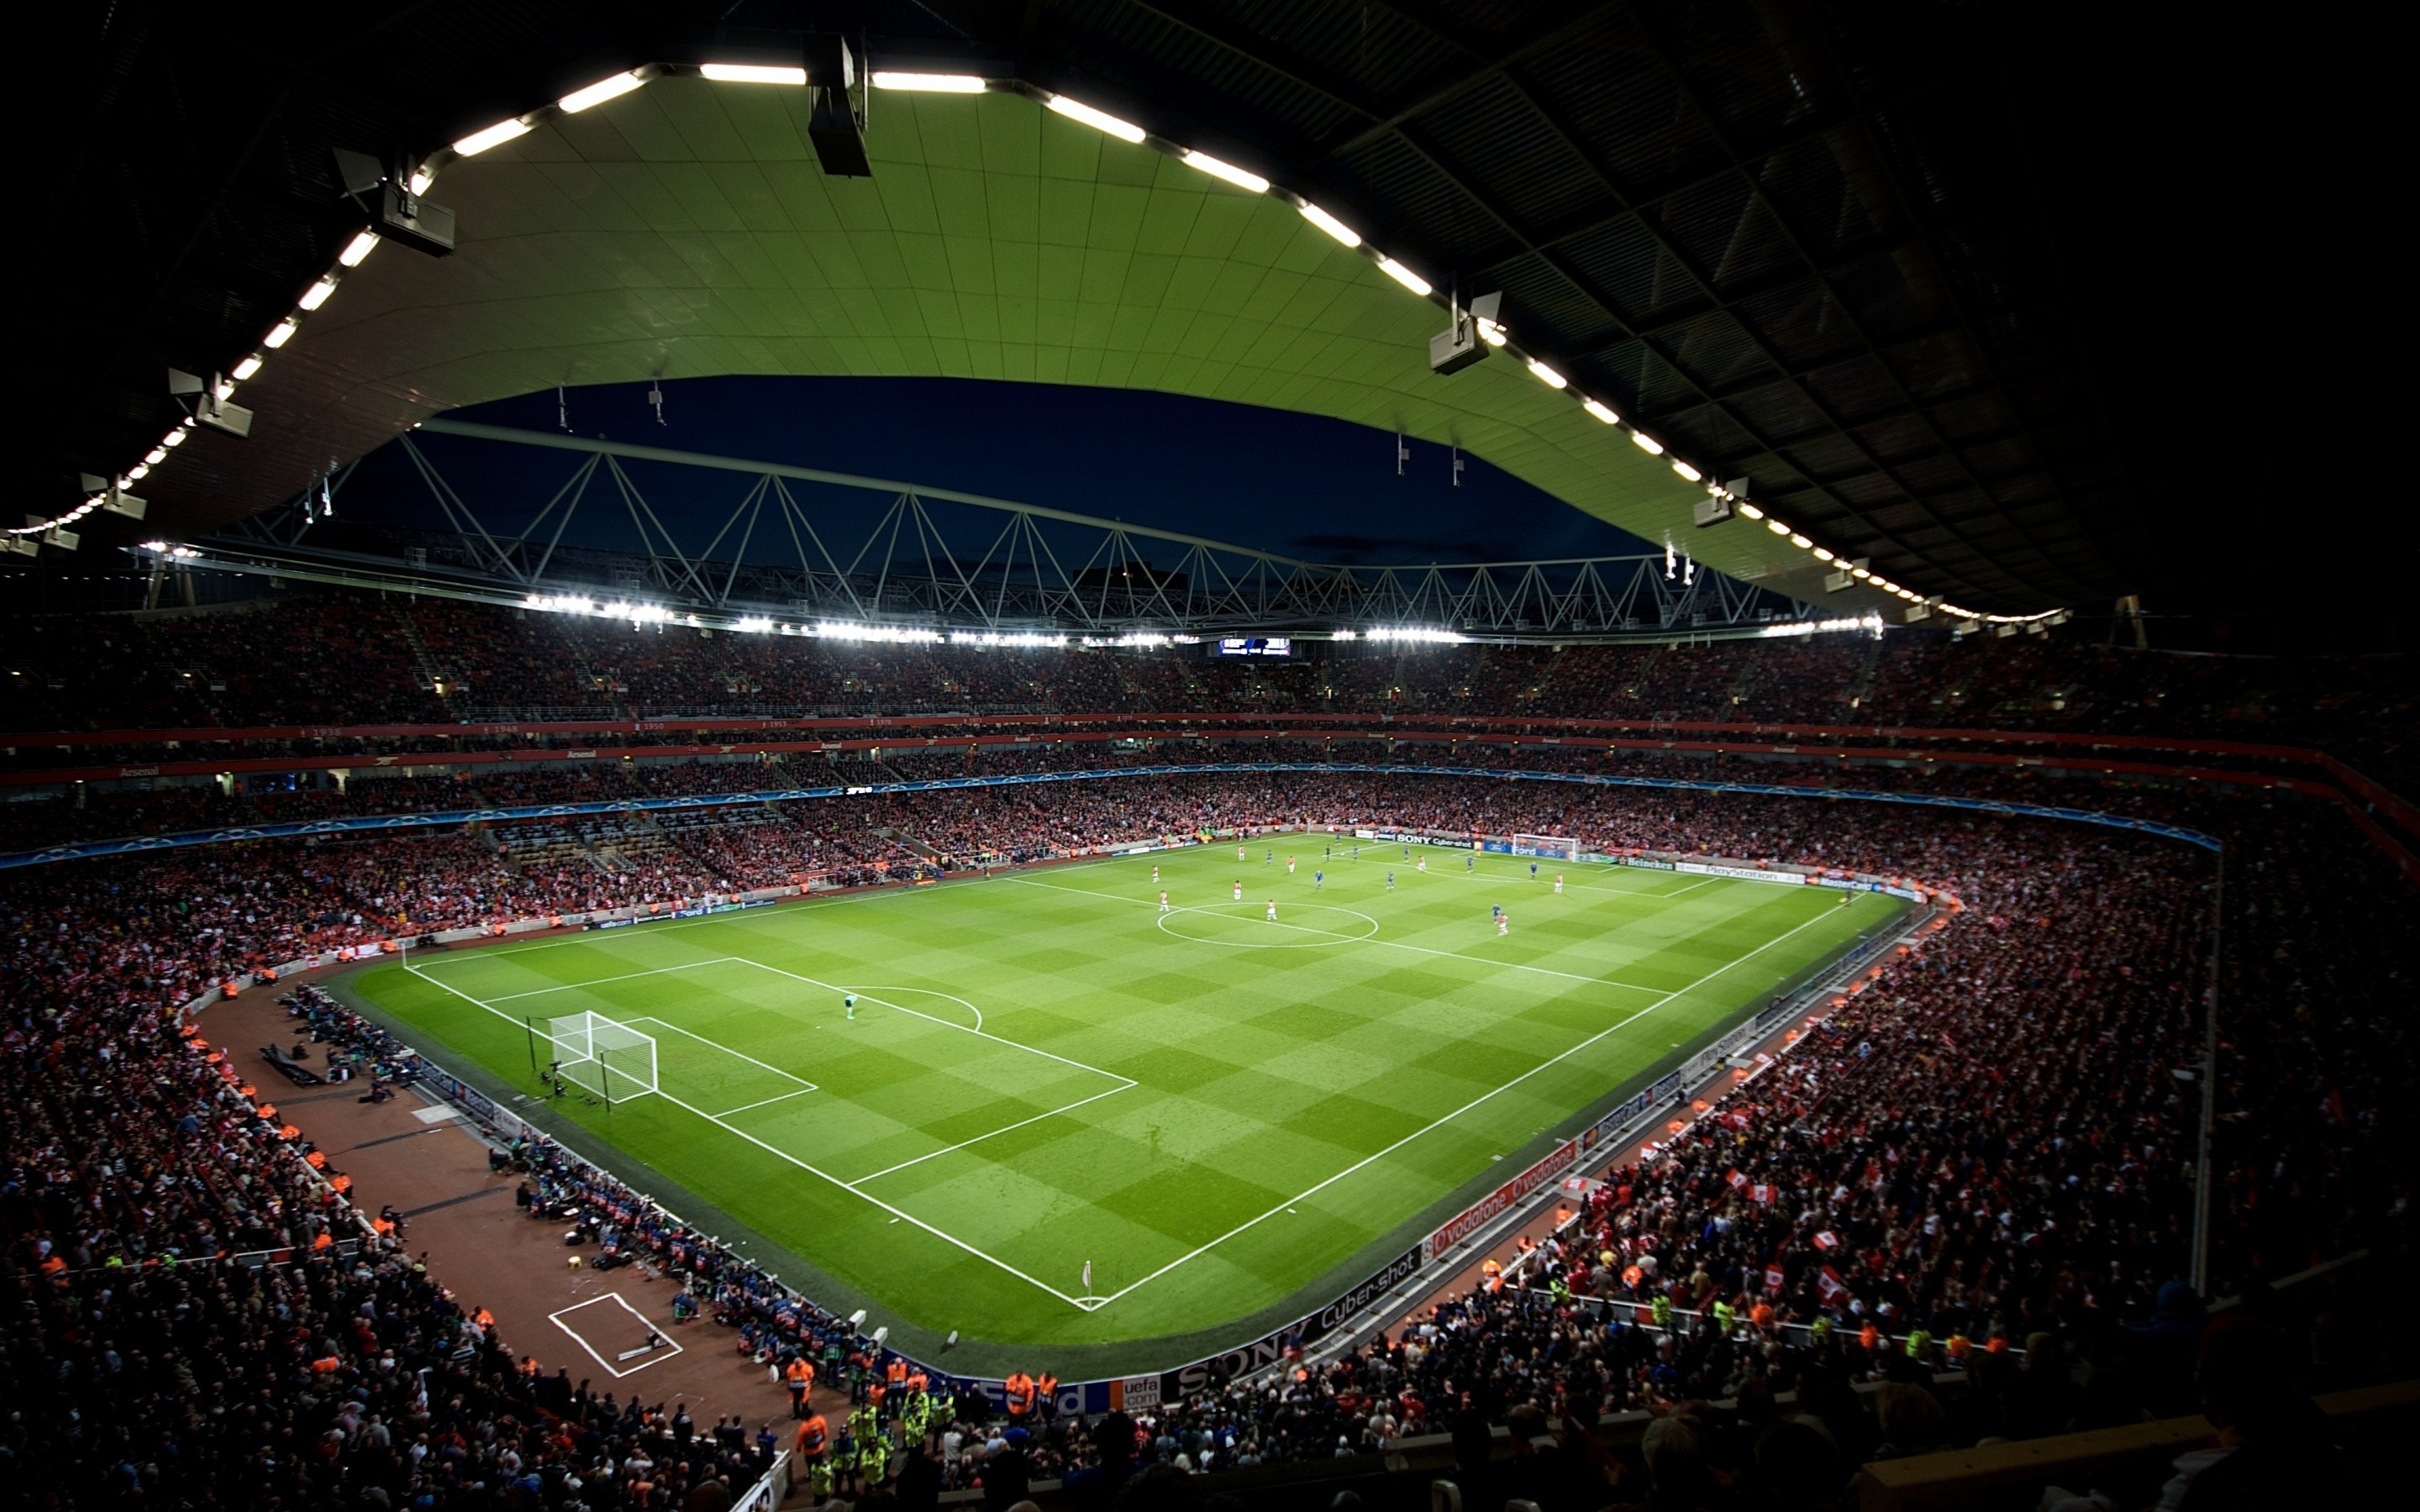 Stadium in Emirates for 2880 x 1800 Retina Display resolution